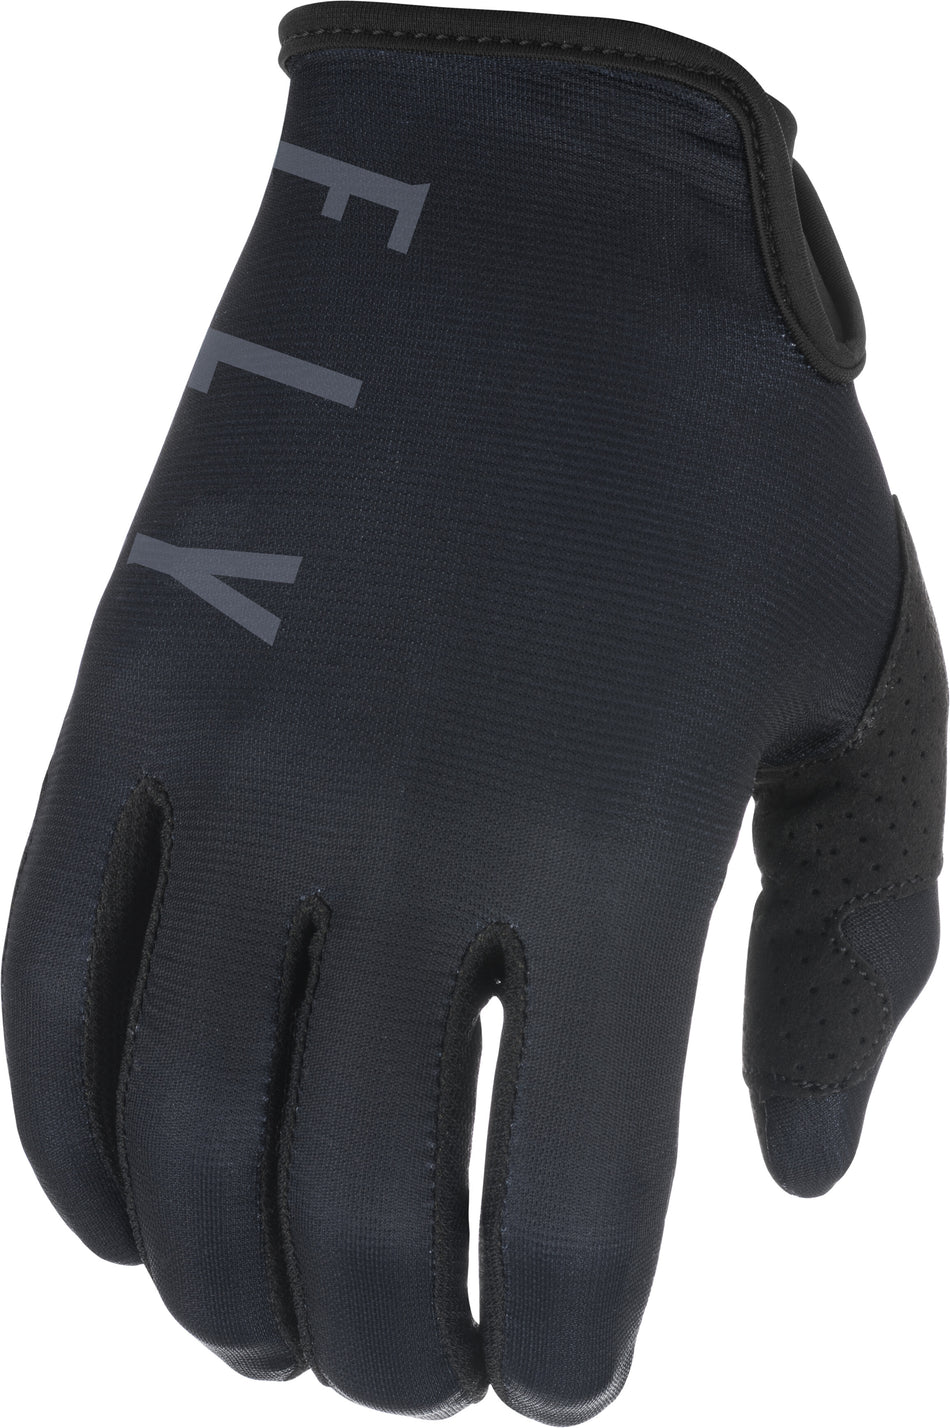 FLY RACING Lite Gloves Black/Grey Sz 08 374-71008